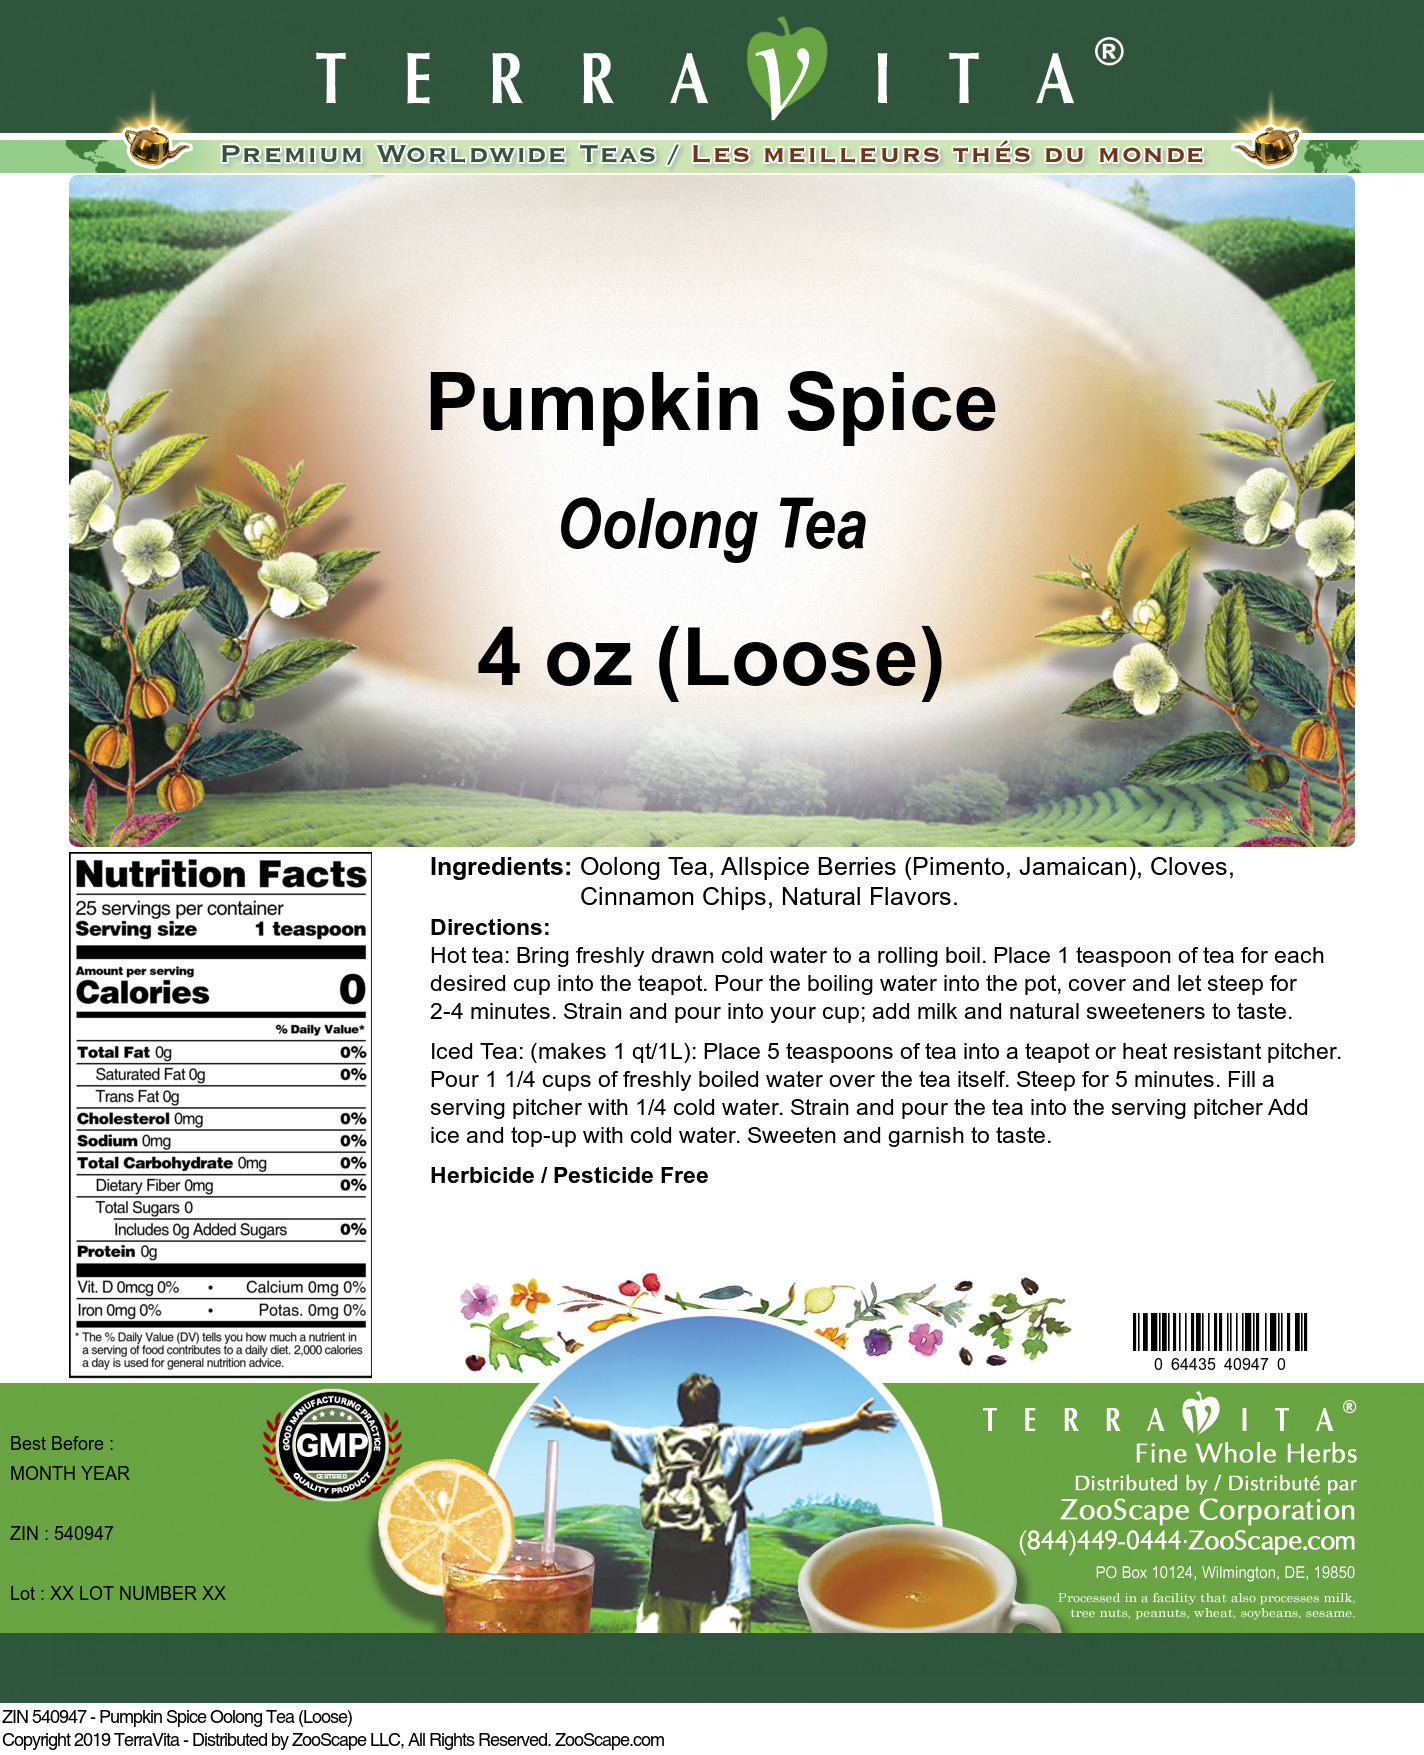 Pumpkin Spice Oolong Tea (Loose) - Label